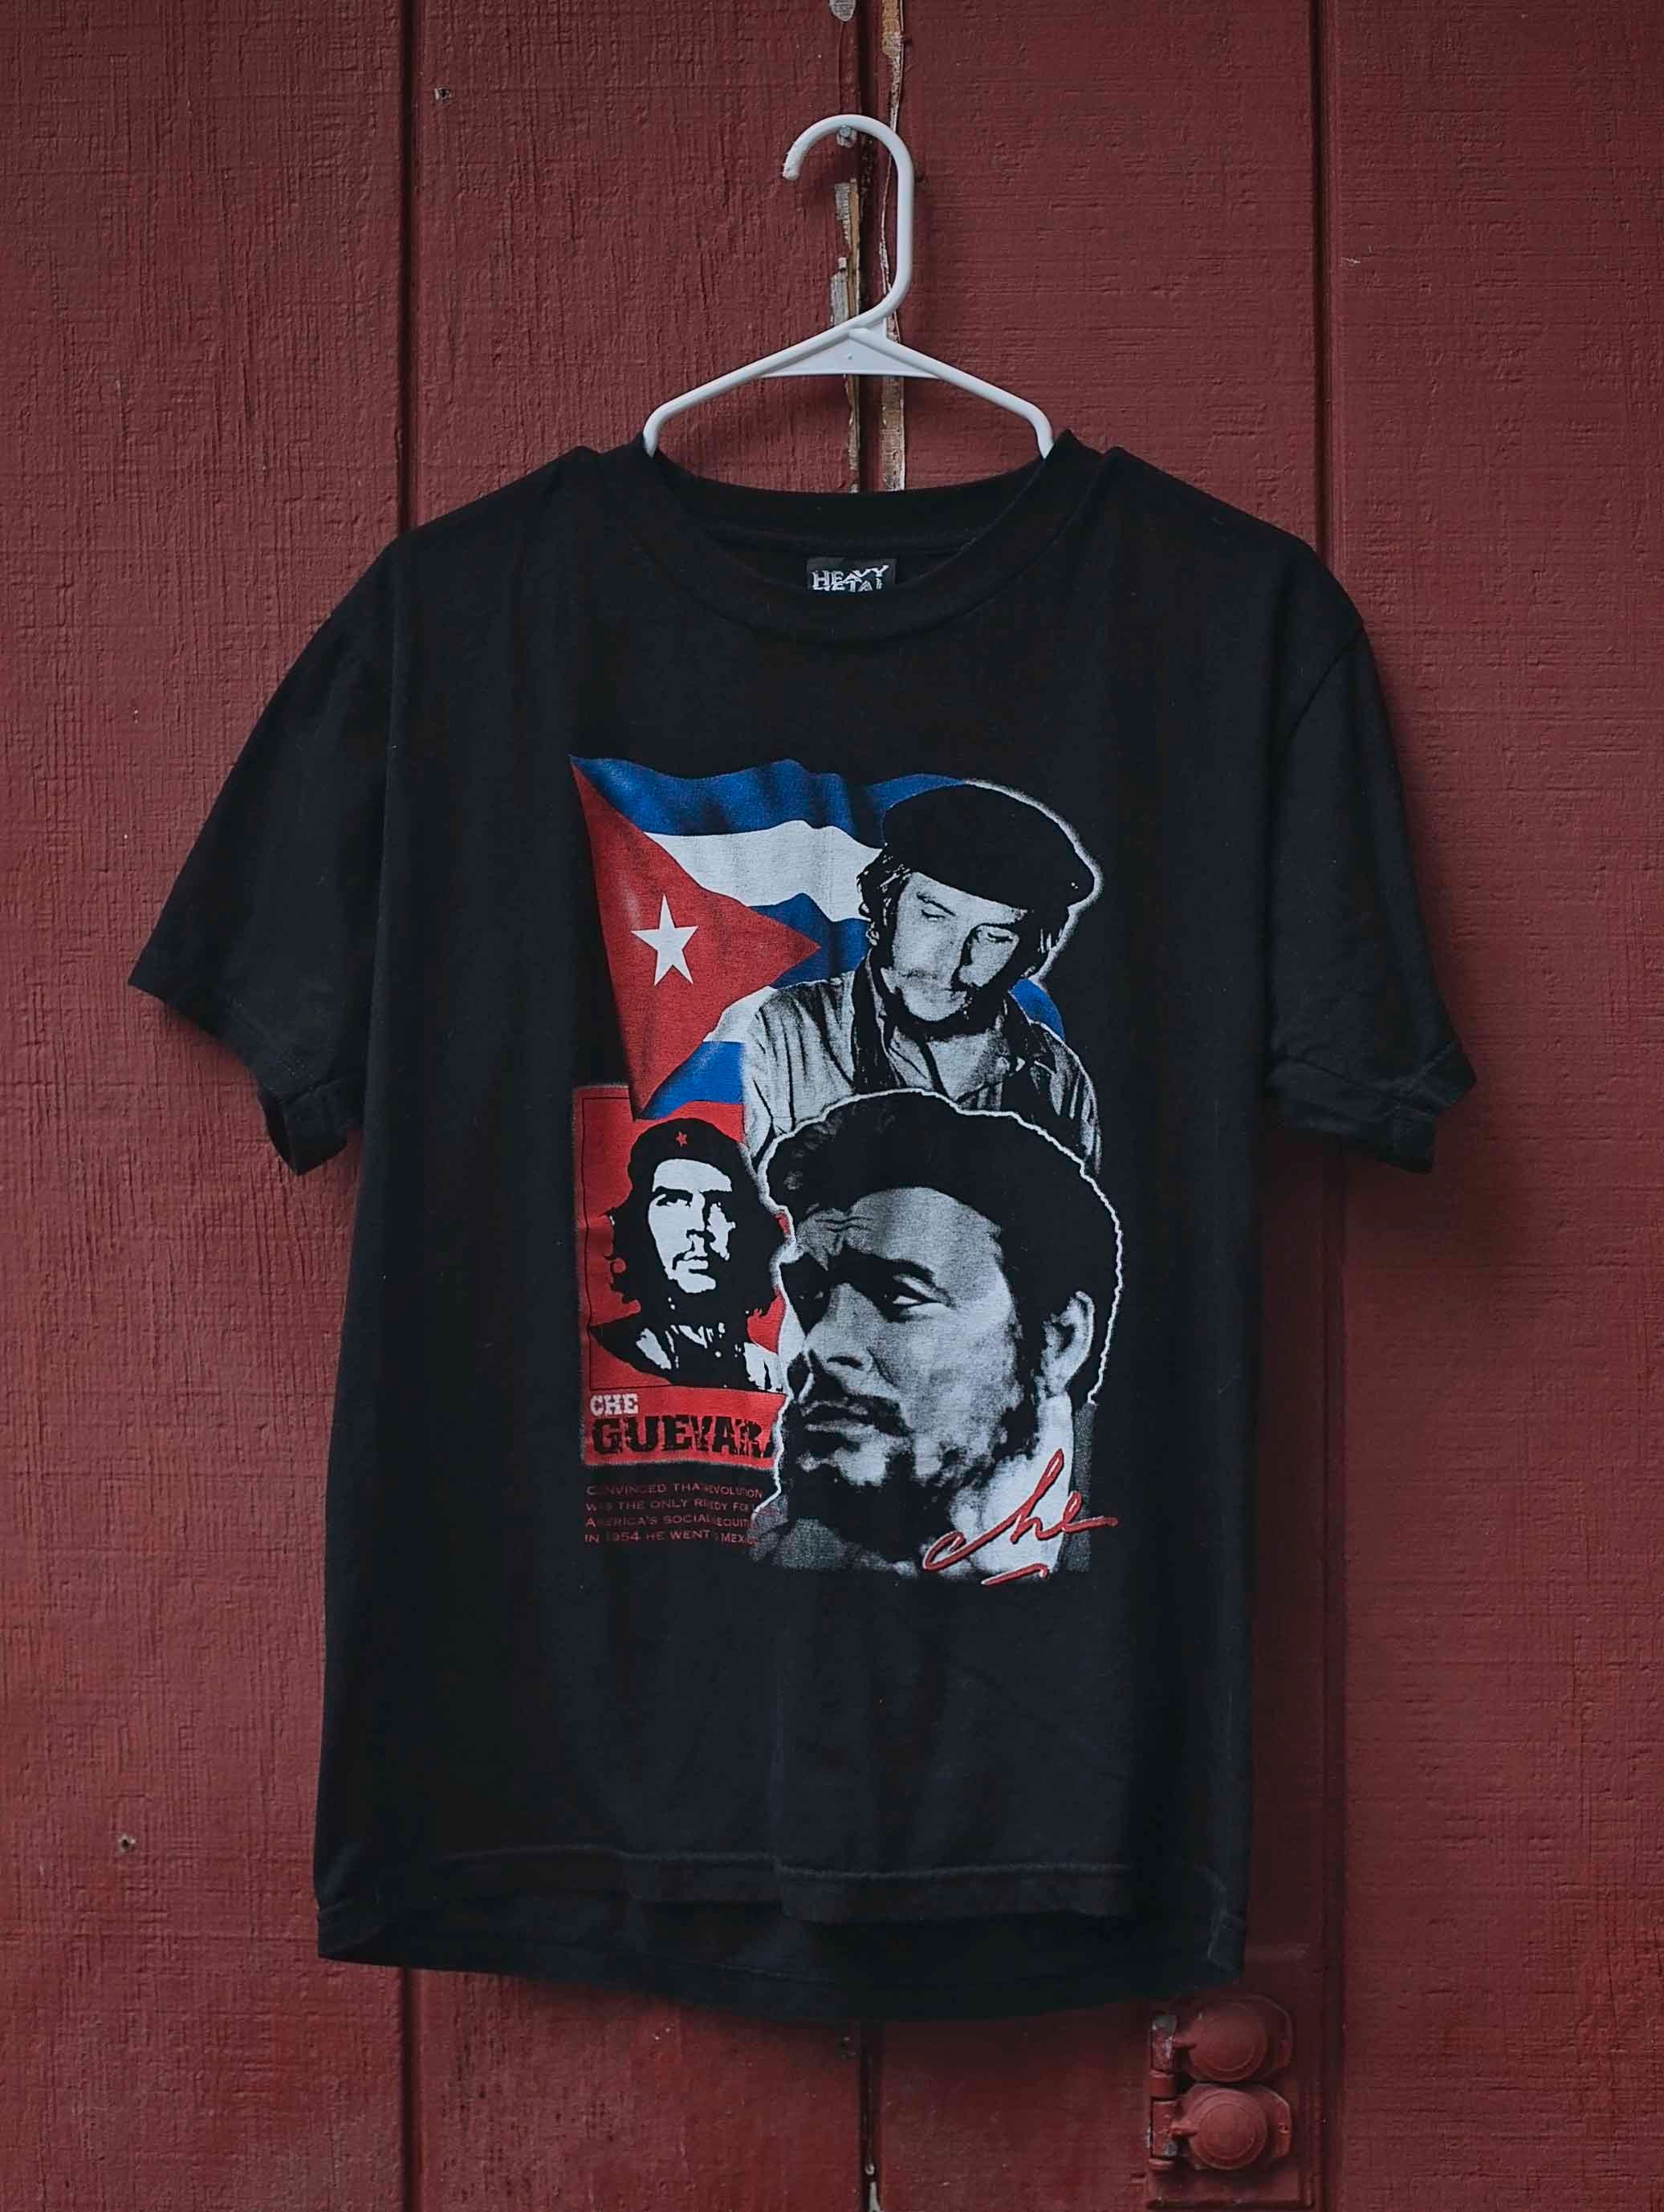 Summer vintage new fashion Che Guevara 3D-printed T-shirt casual